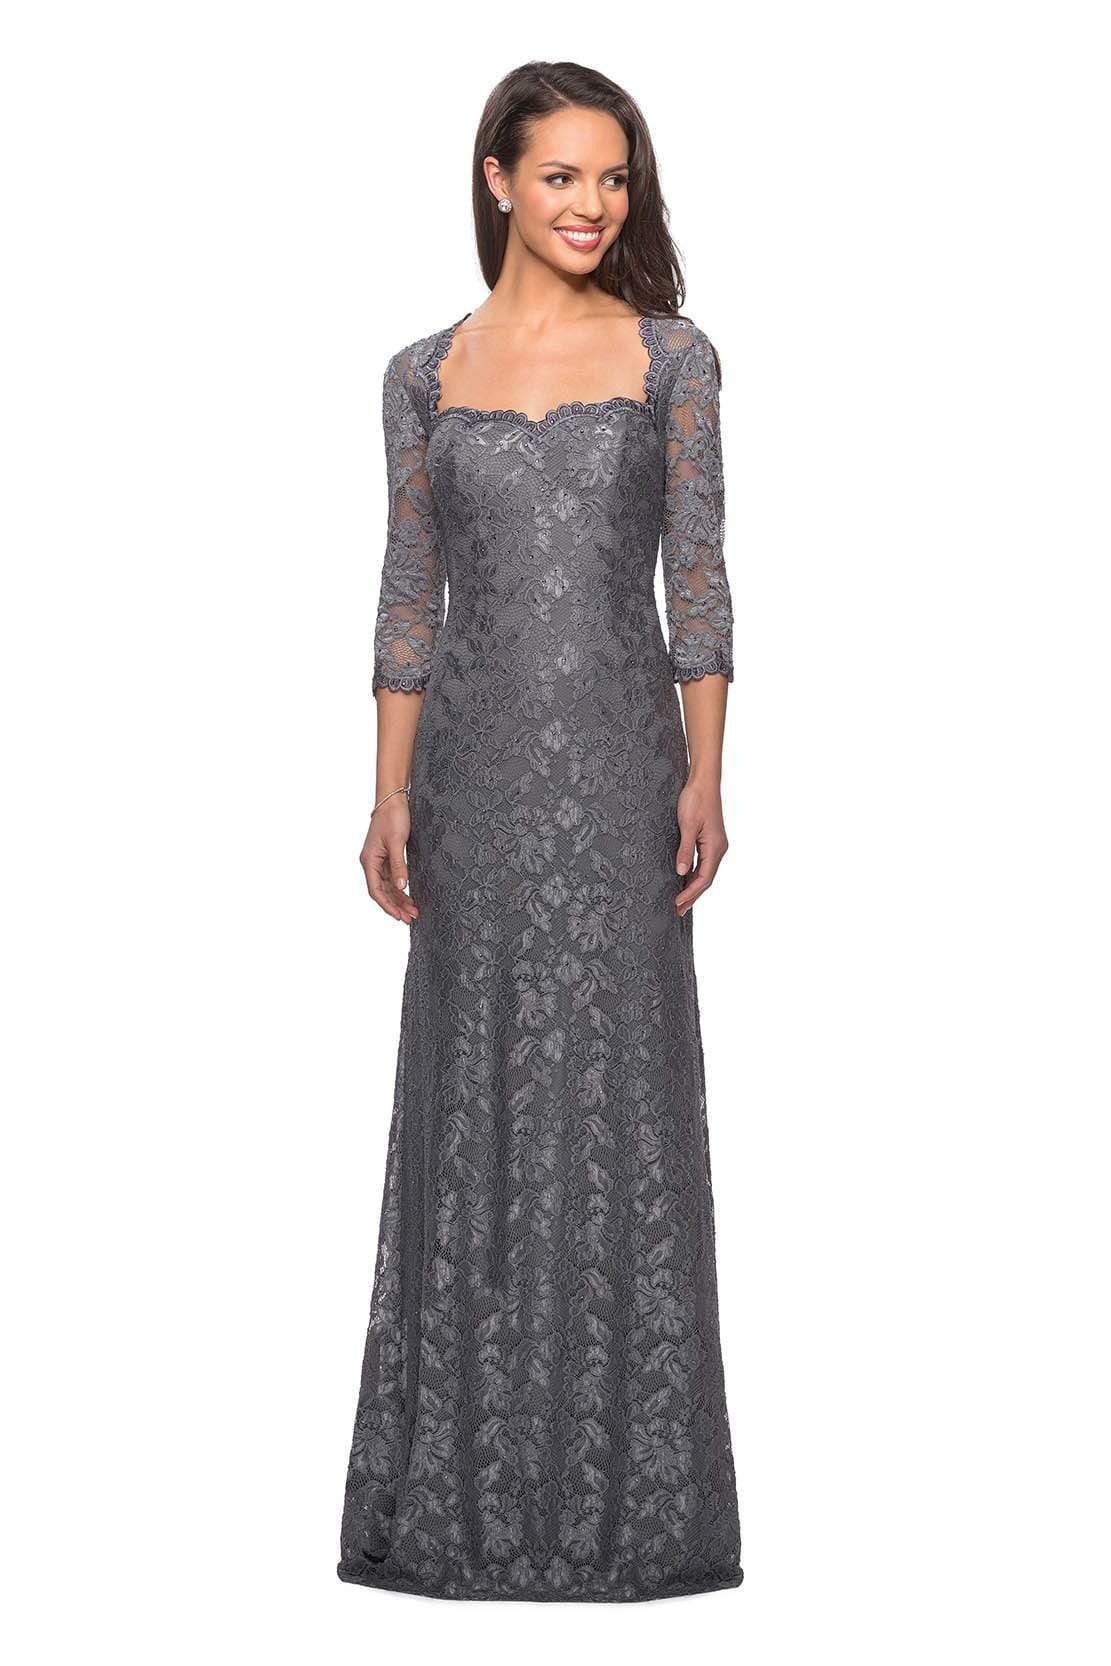 La Femme - 26427 Floral Lace Sheer Quarter Sleeve Sheath Gown
